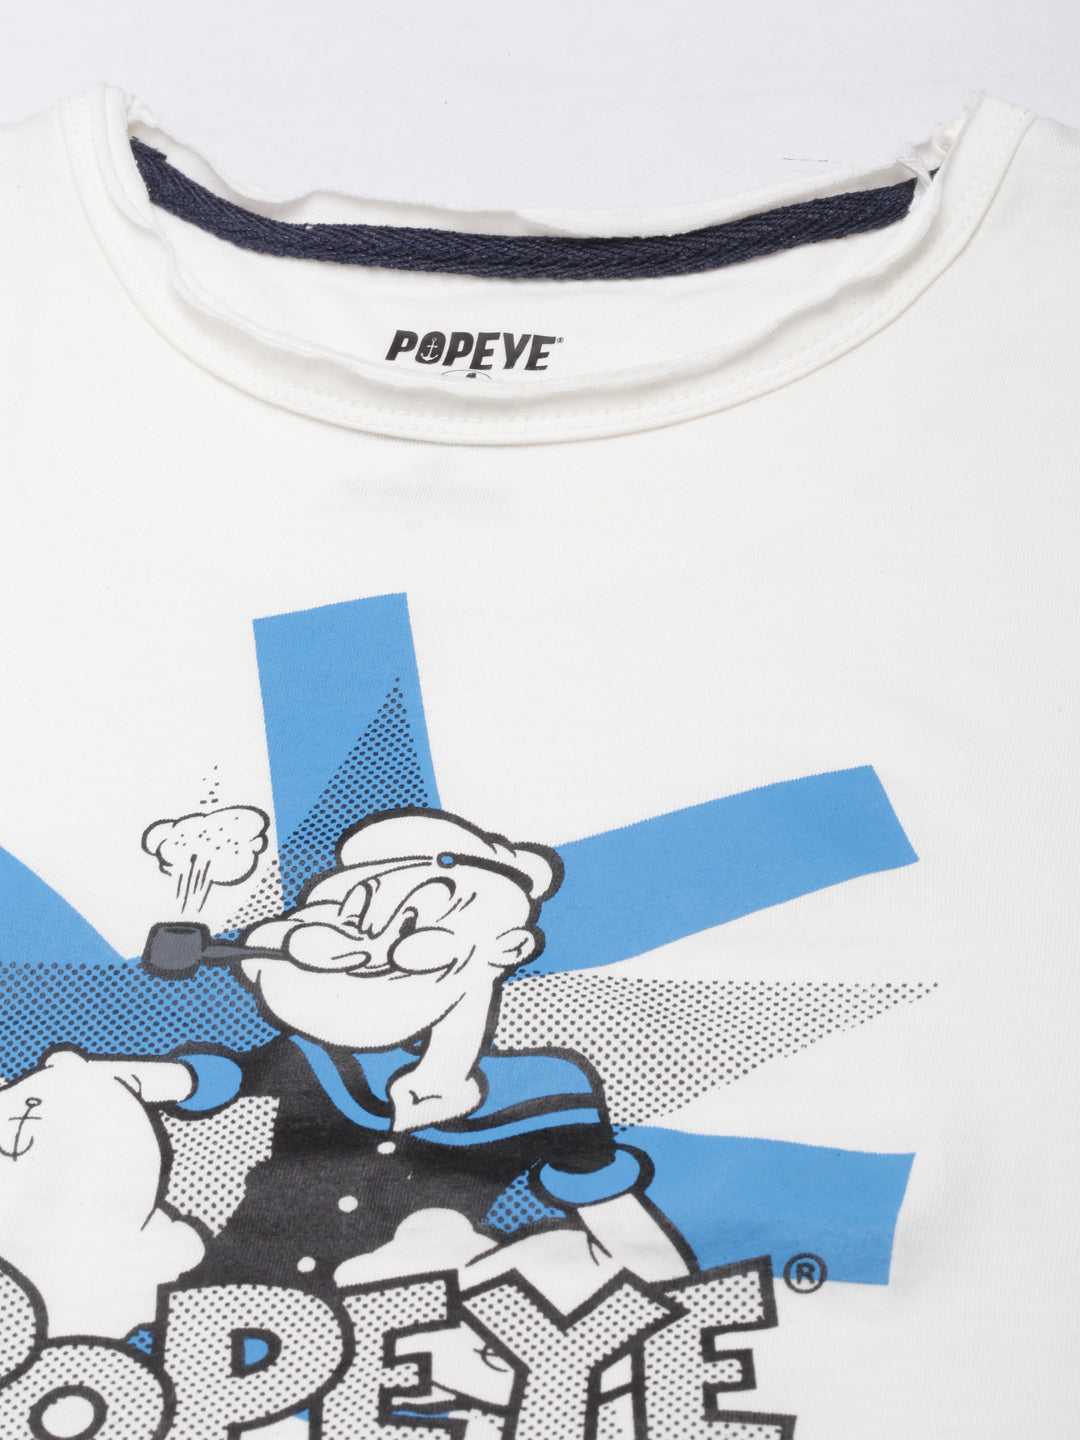 Printed Popeye White T-Shirt